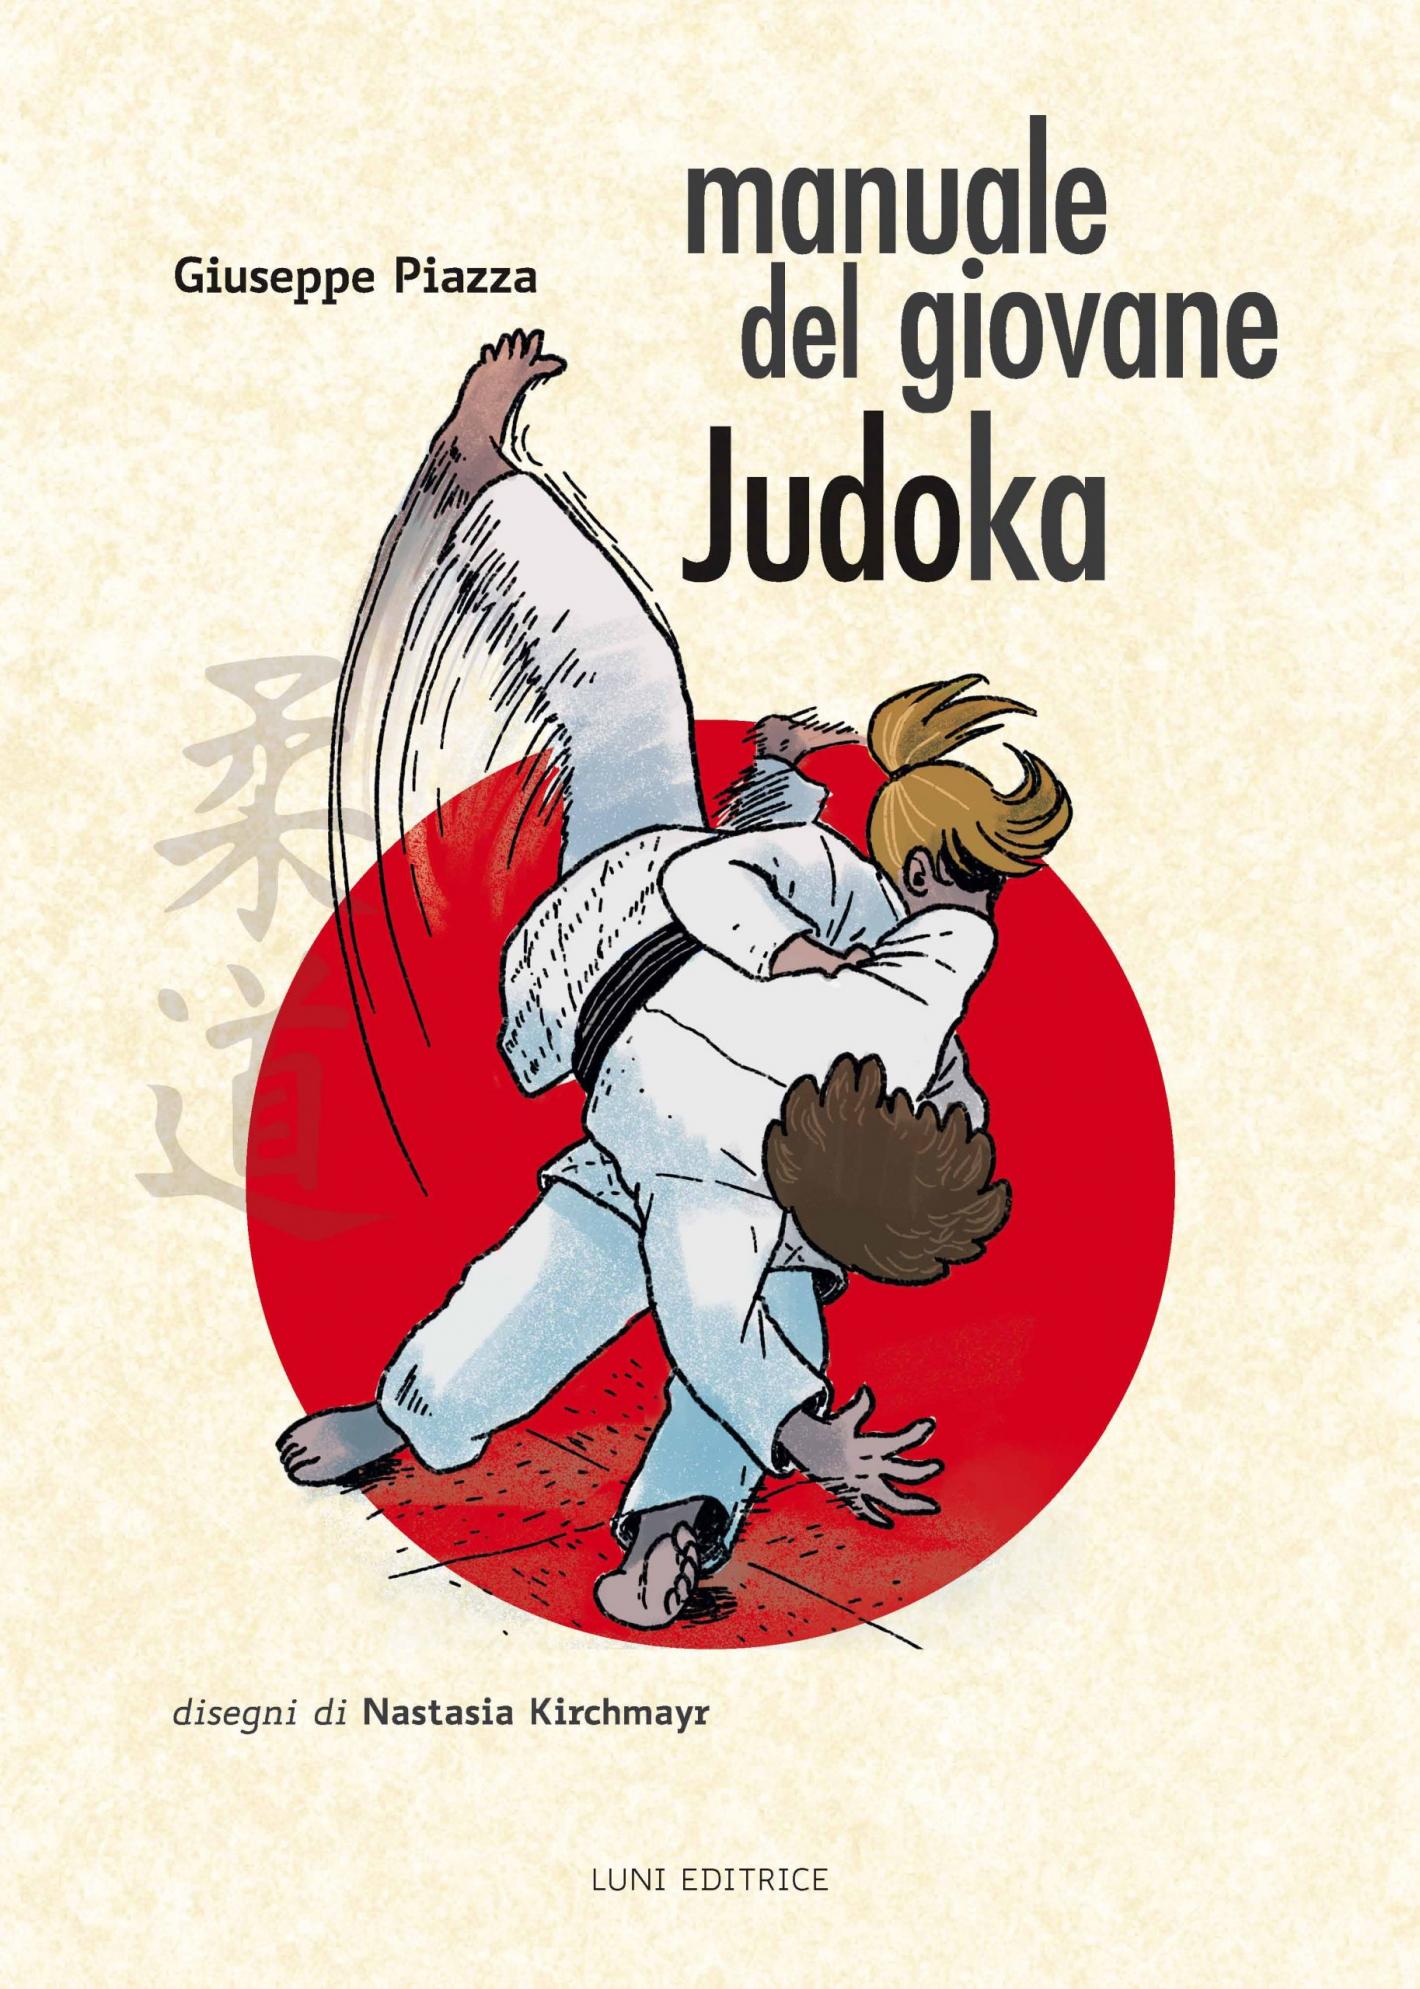 images/friuli_venezia_giulia/2022/medium/0121_manuale_del_giovane_judoka.jpg